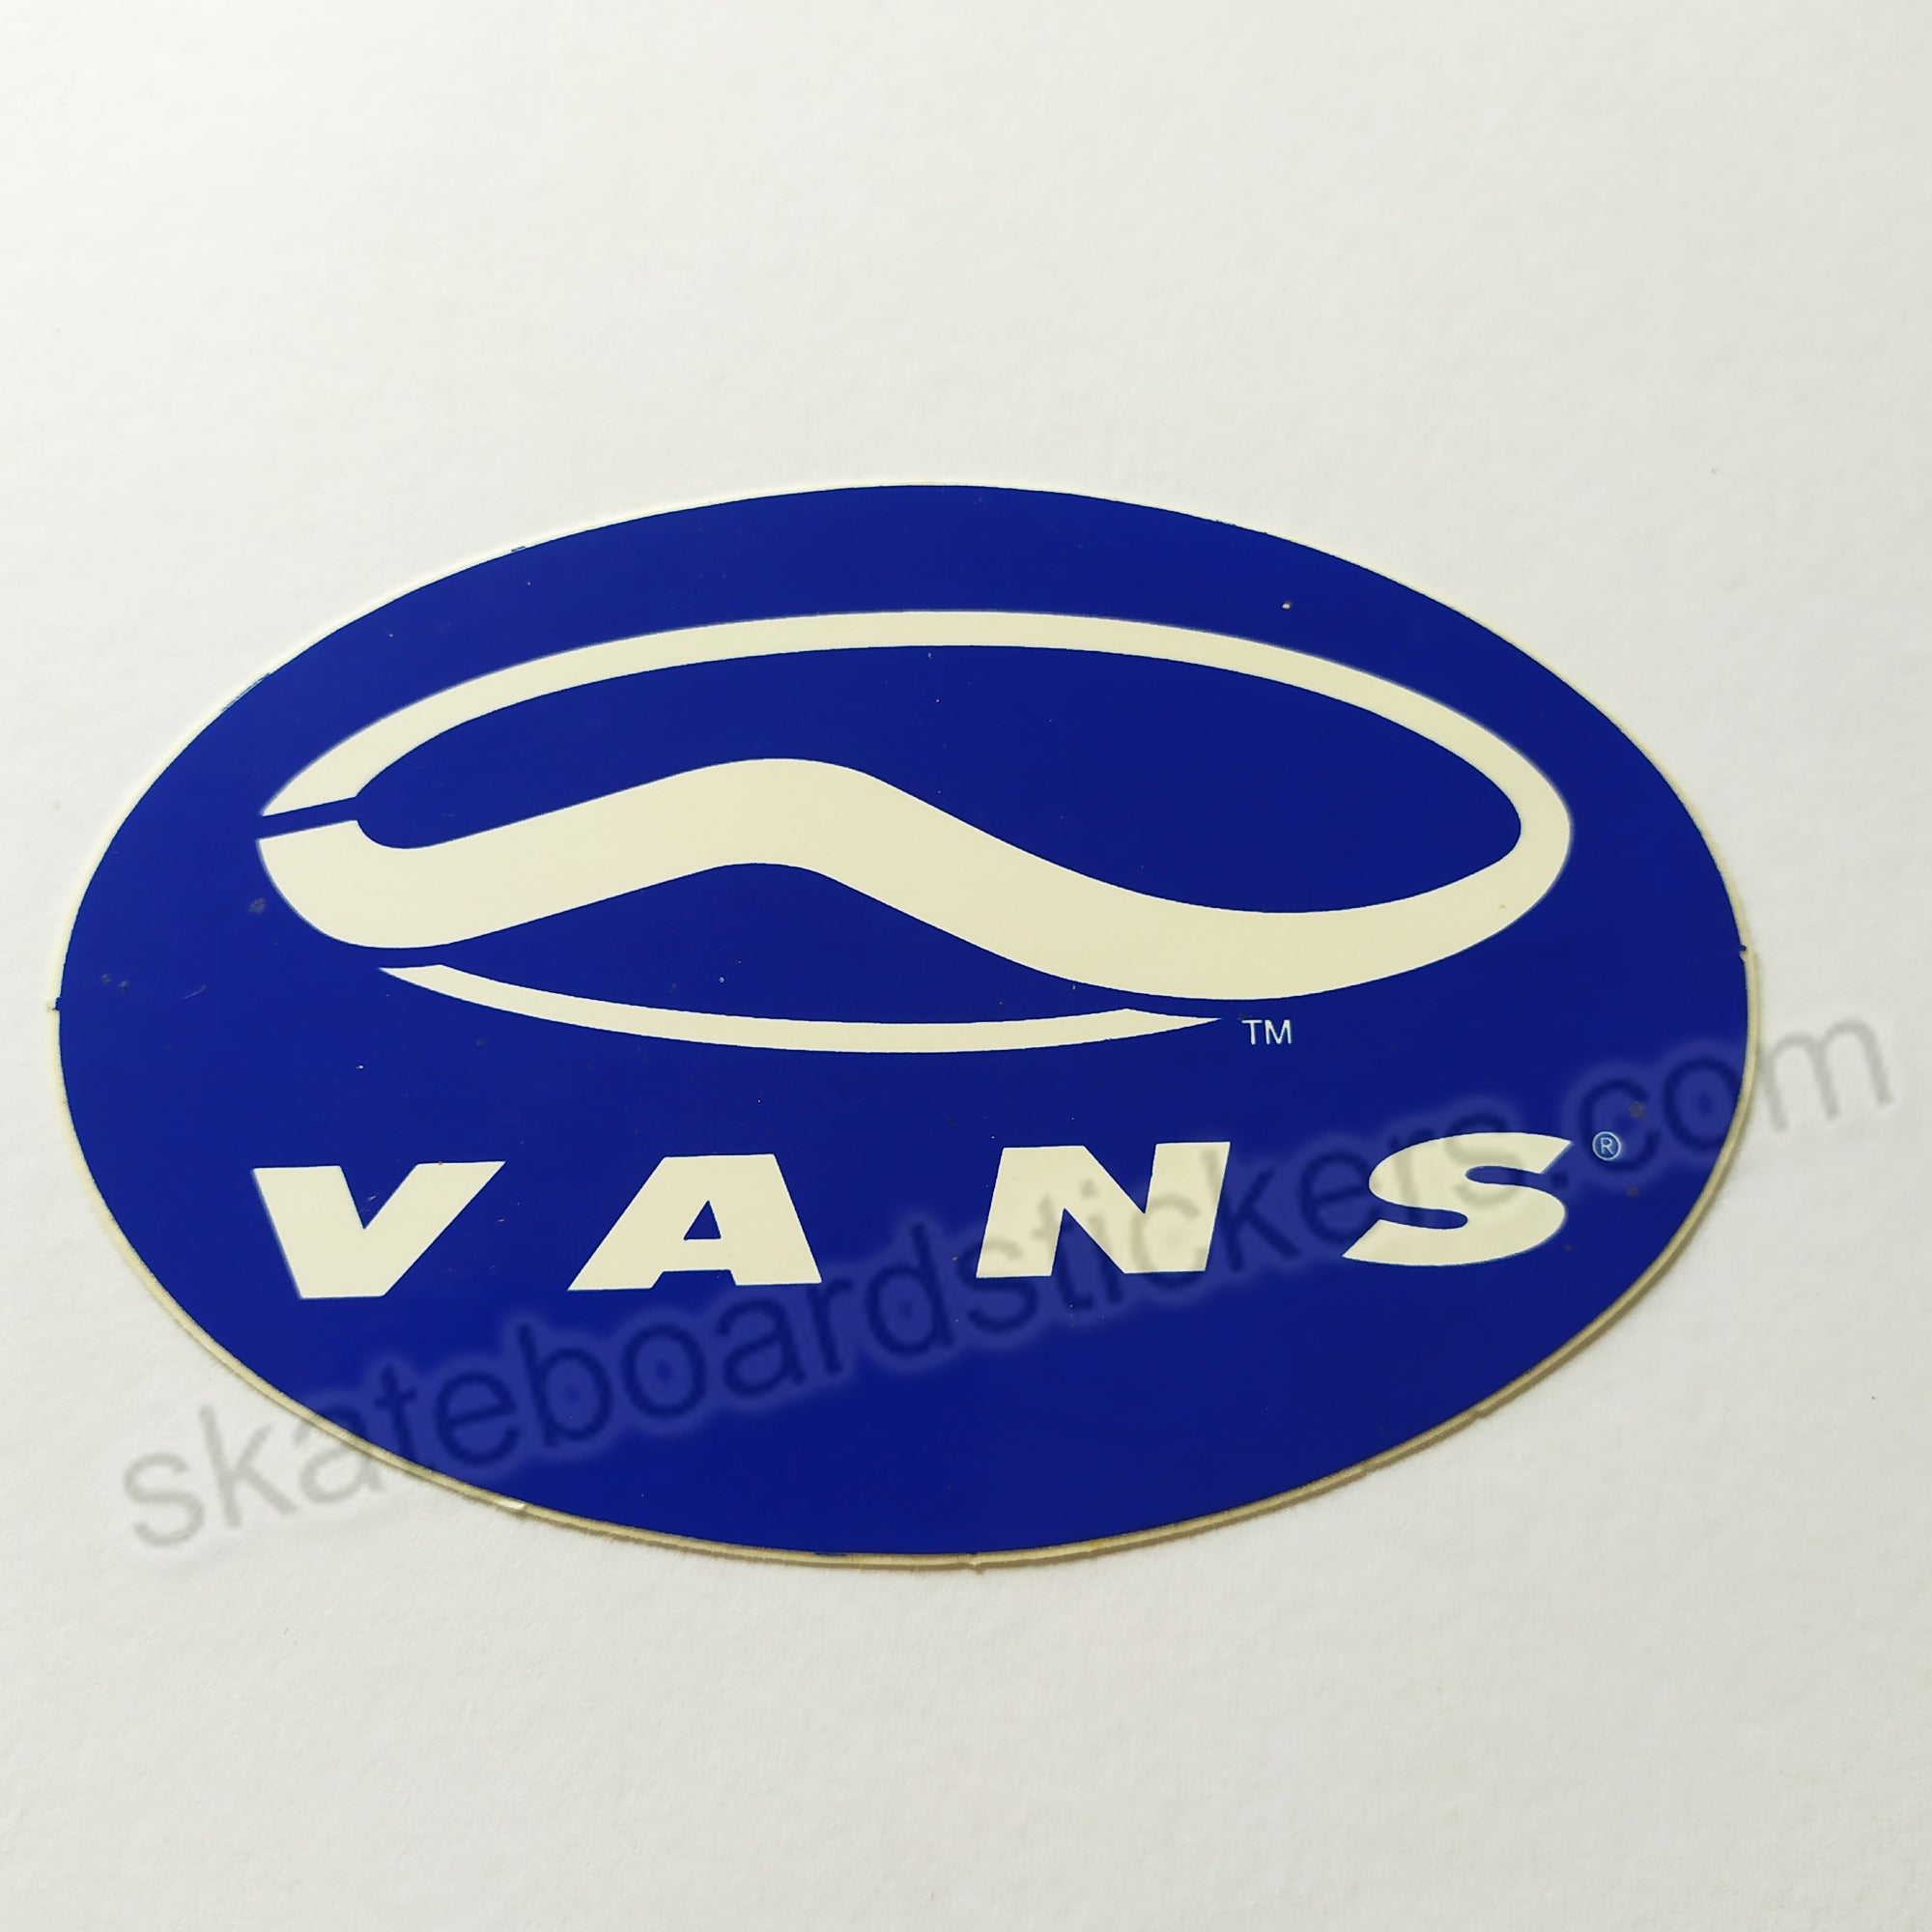 Vans Shoes Skateboard Sticker from the 90s! - Blue - SkateboardStickers.com